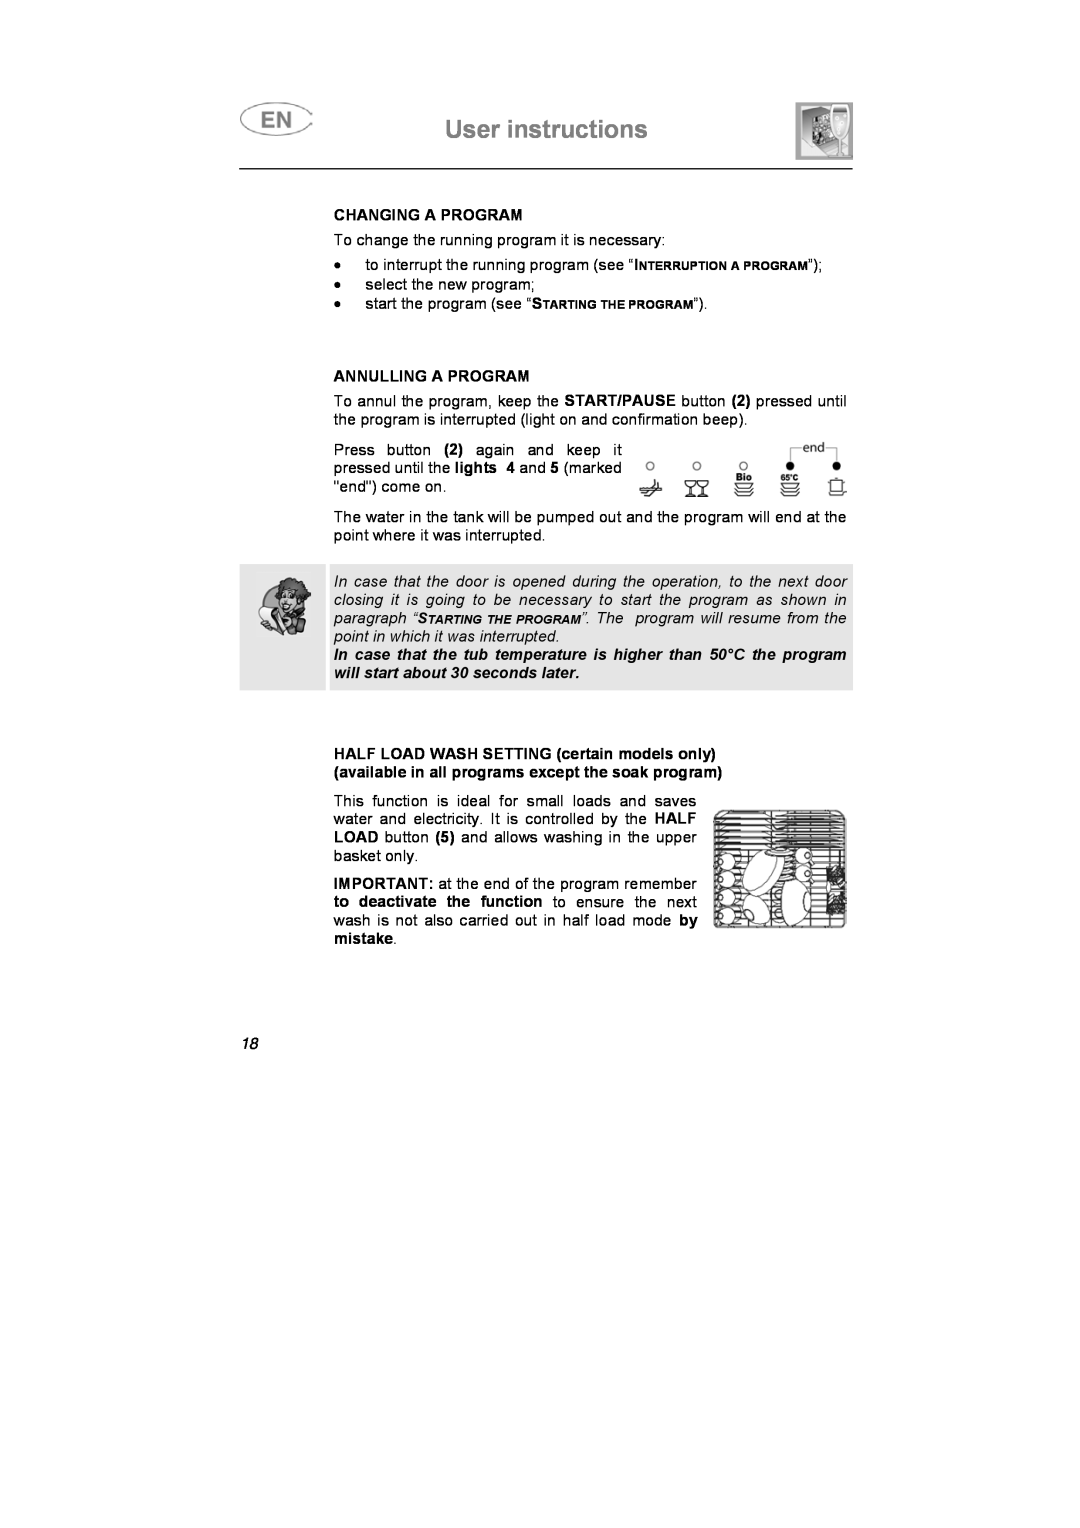 Smeg LSA653E instruction manual User instructions, Changing A Program, Annulling A Program 